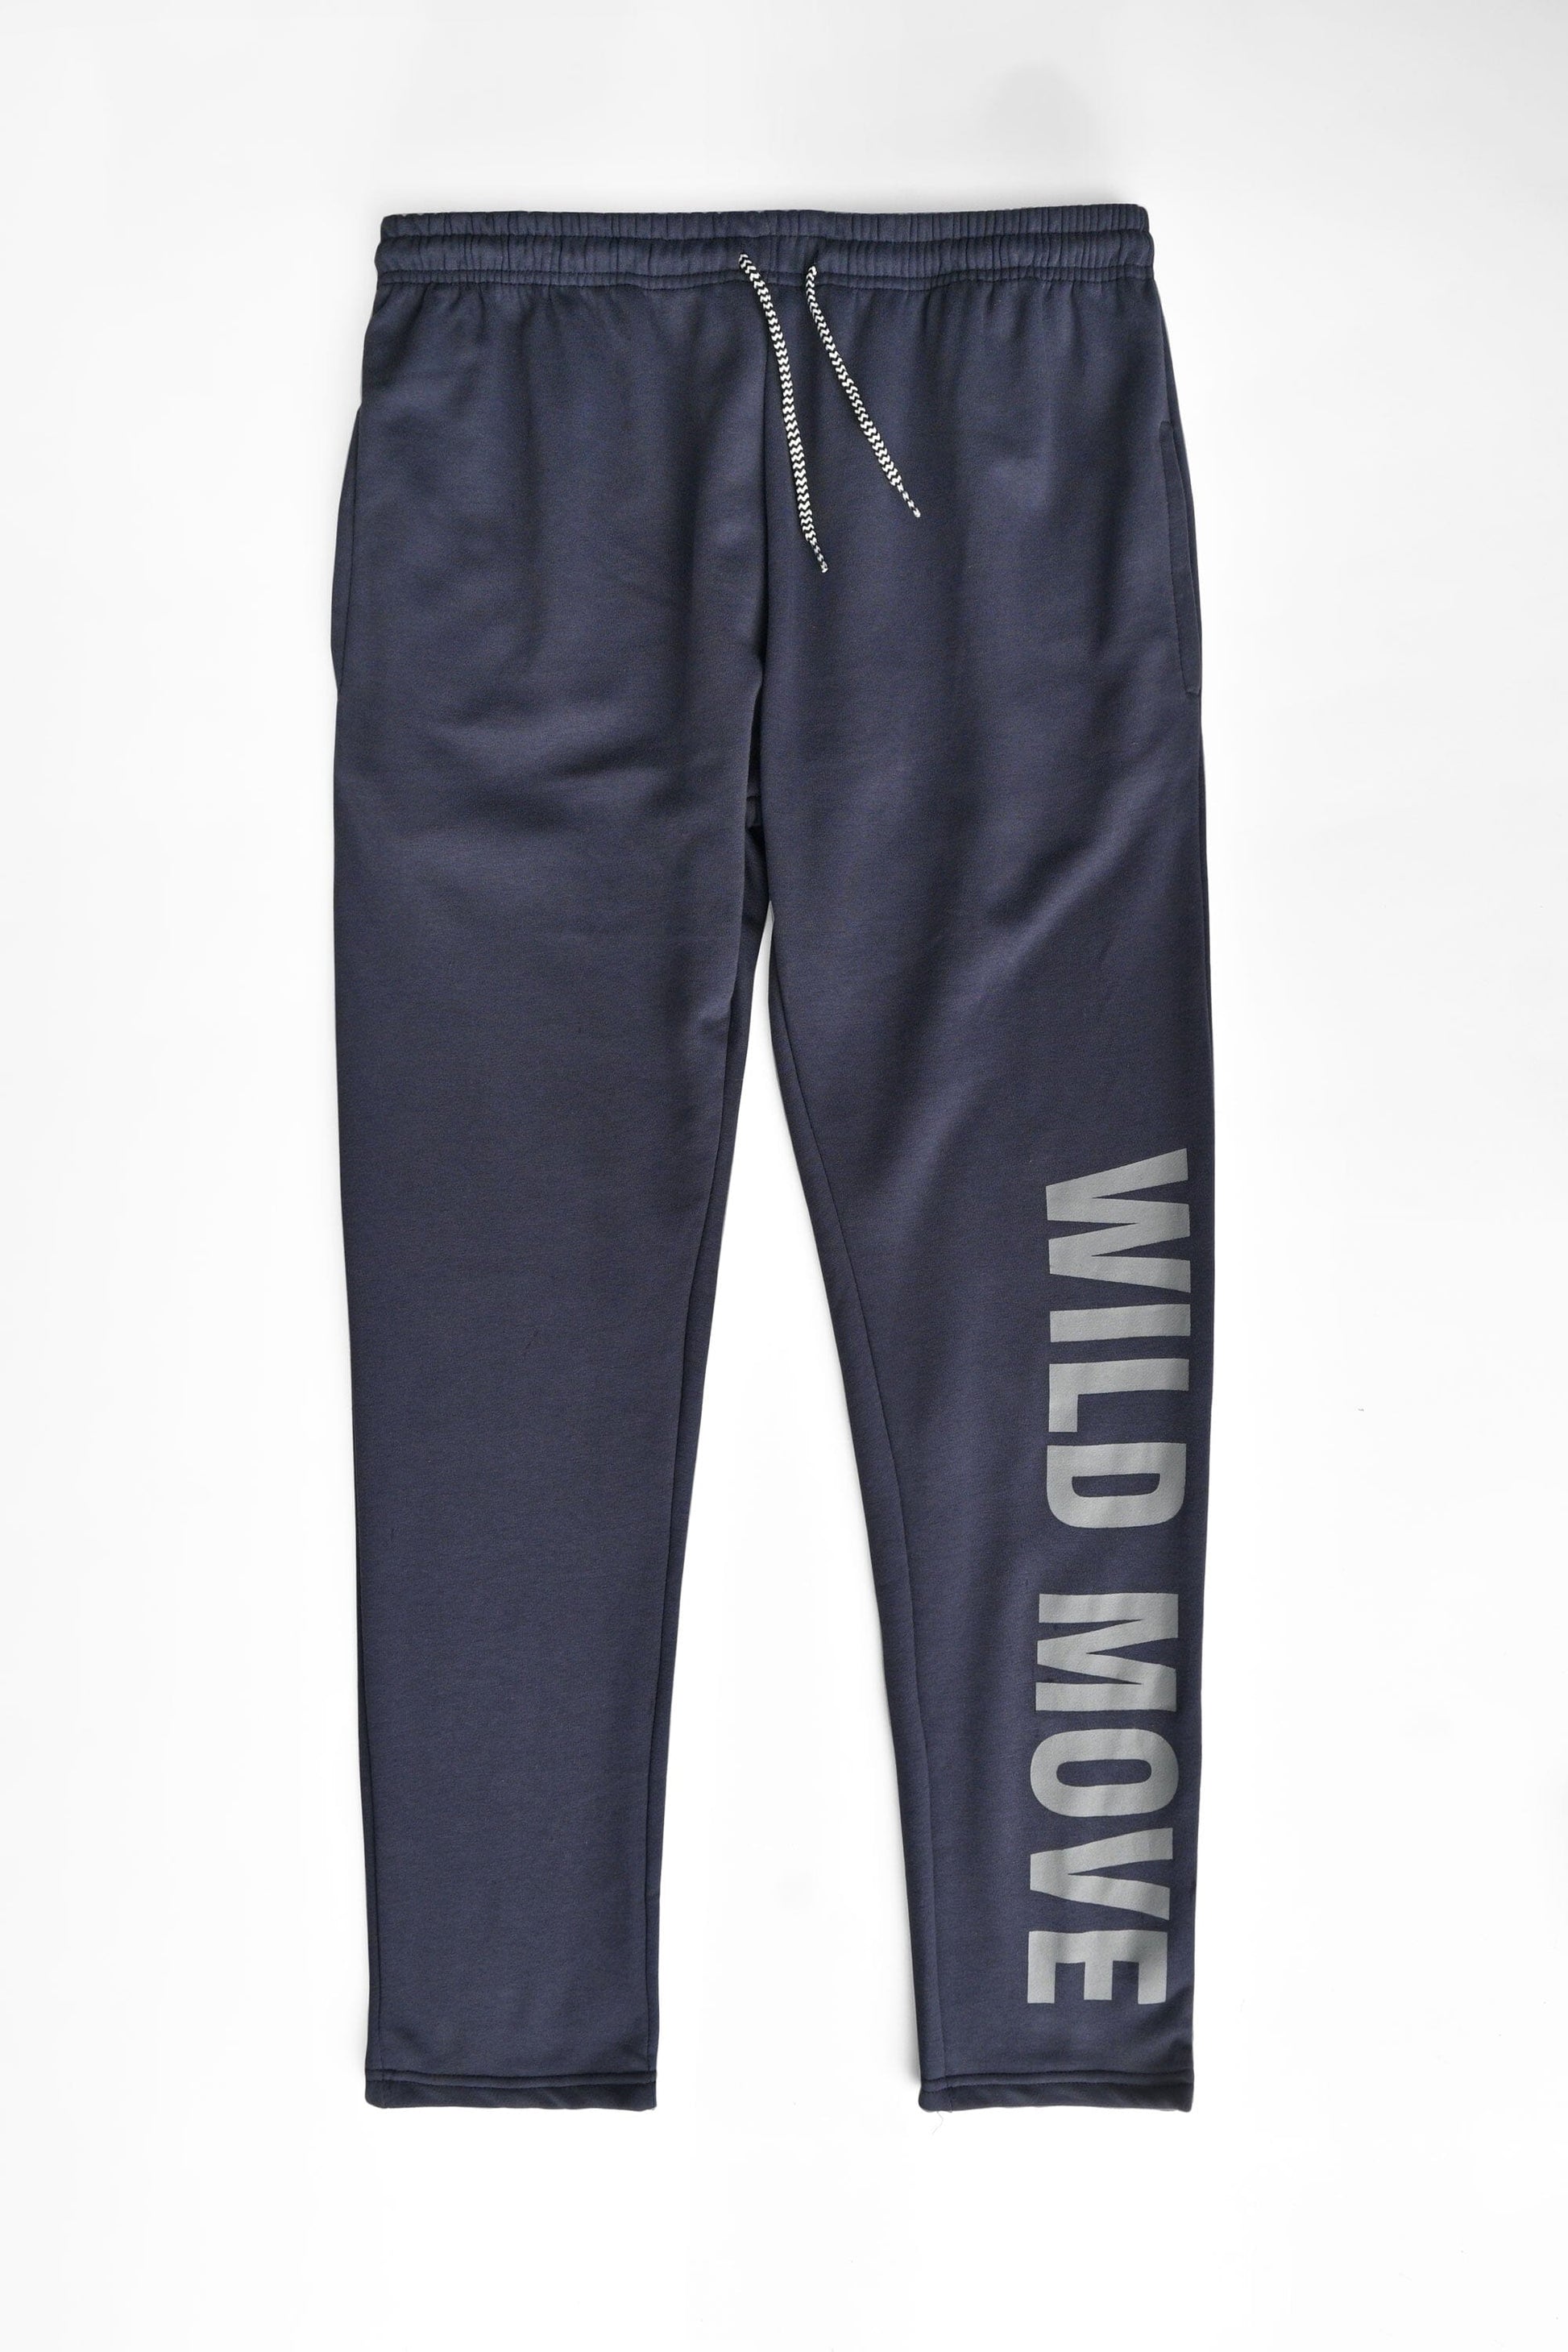 MAX 21 Men's Wild Move Printed Fleece Trousers Men's Trousers SZK 